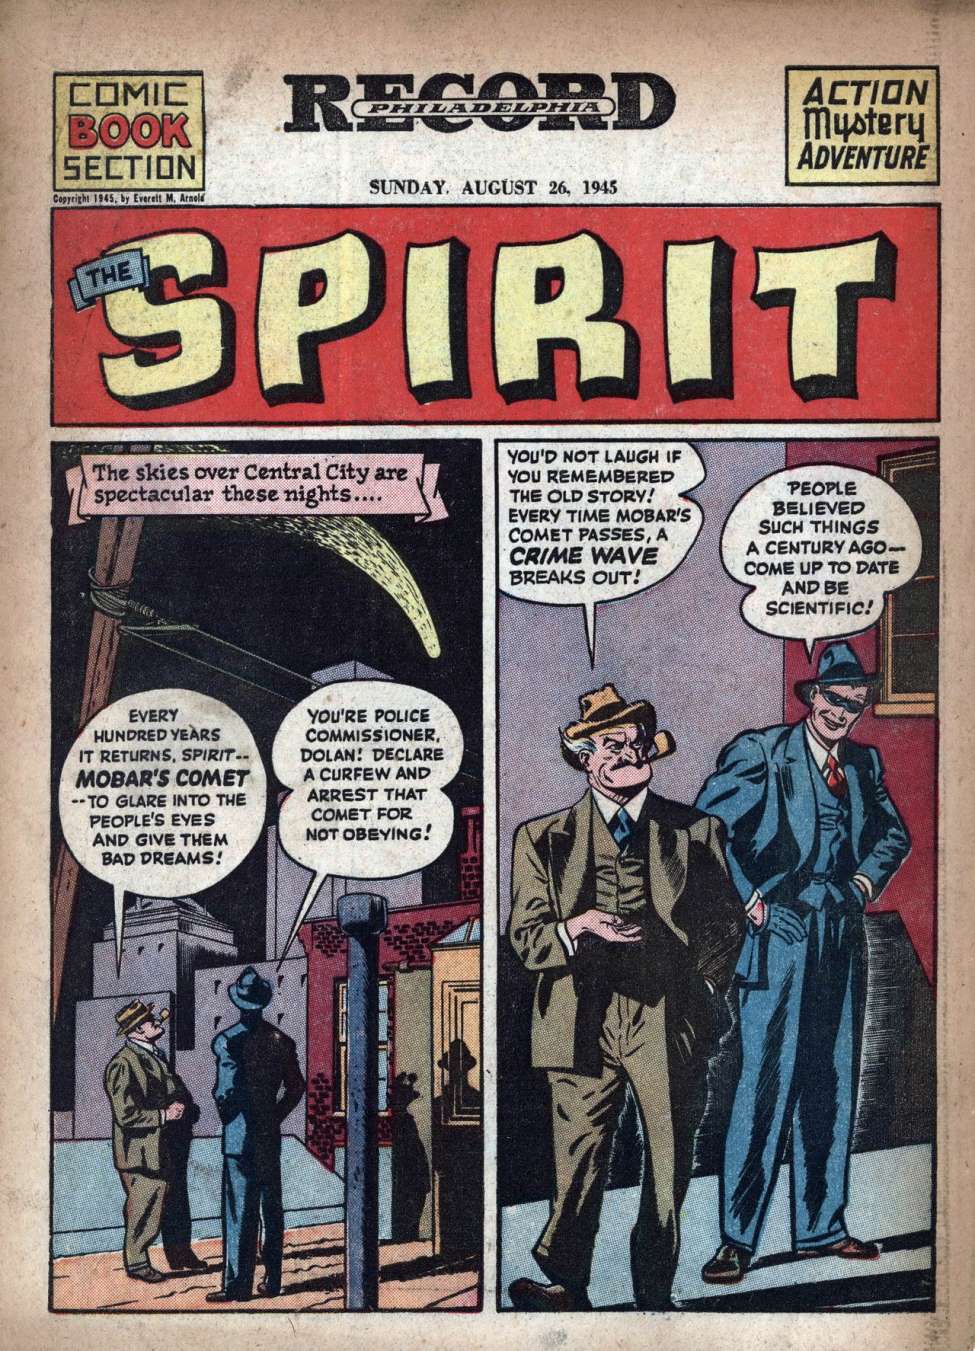 Comic Book Cover For The Spirit (1945-08-26) - Philadelphia Record